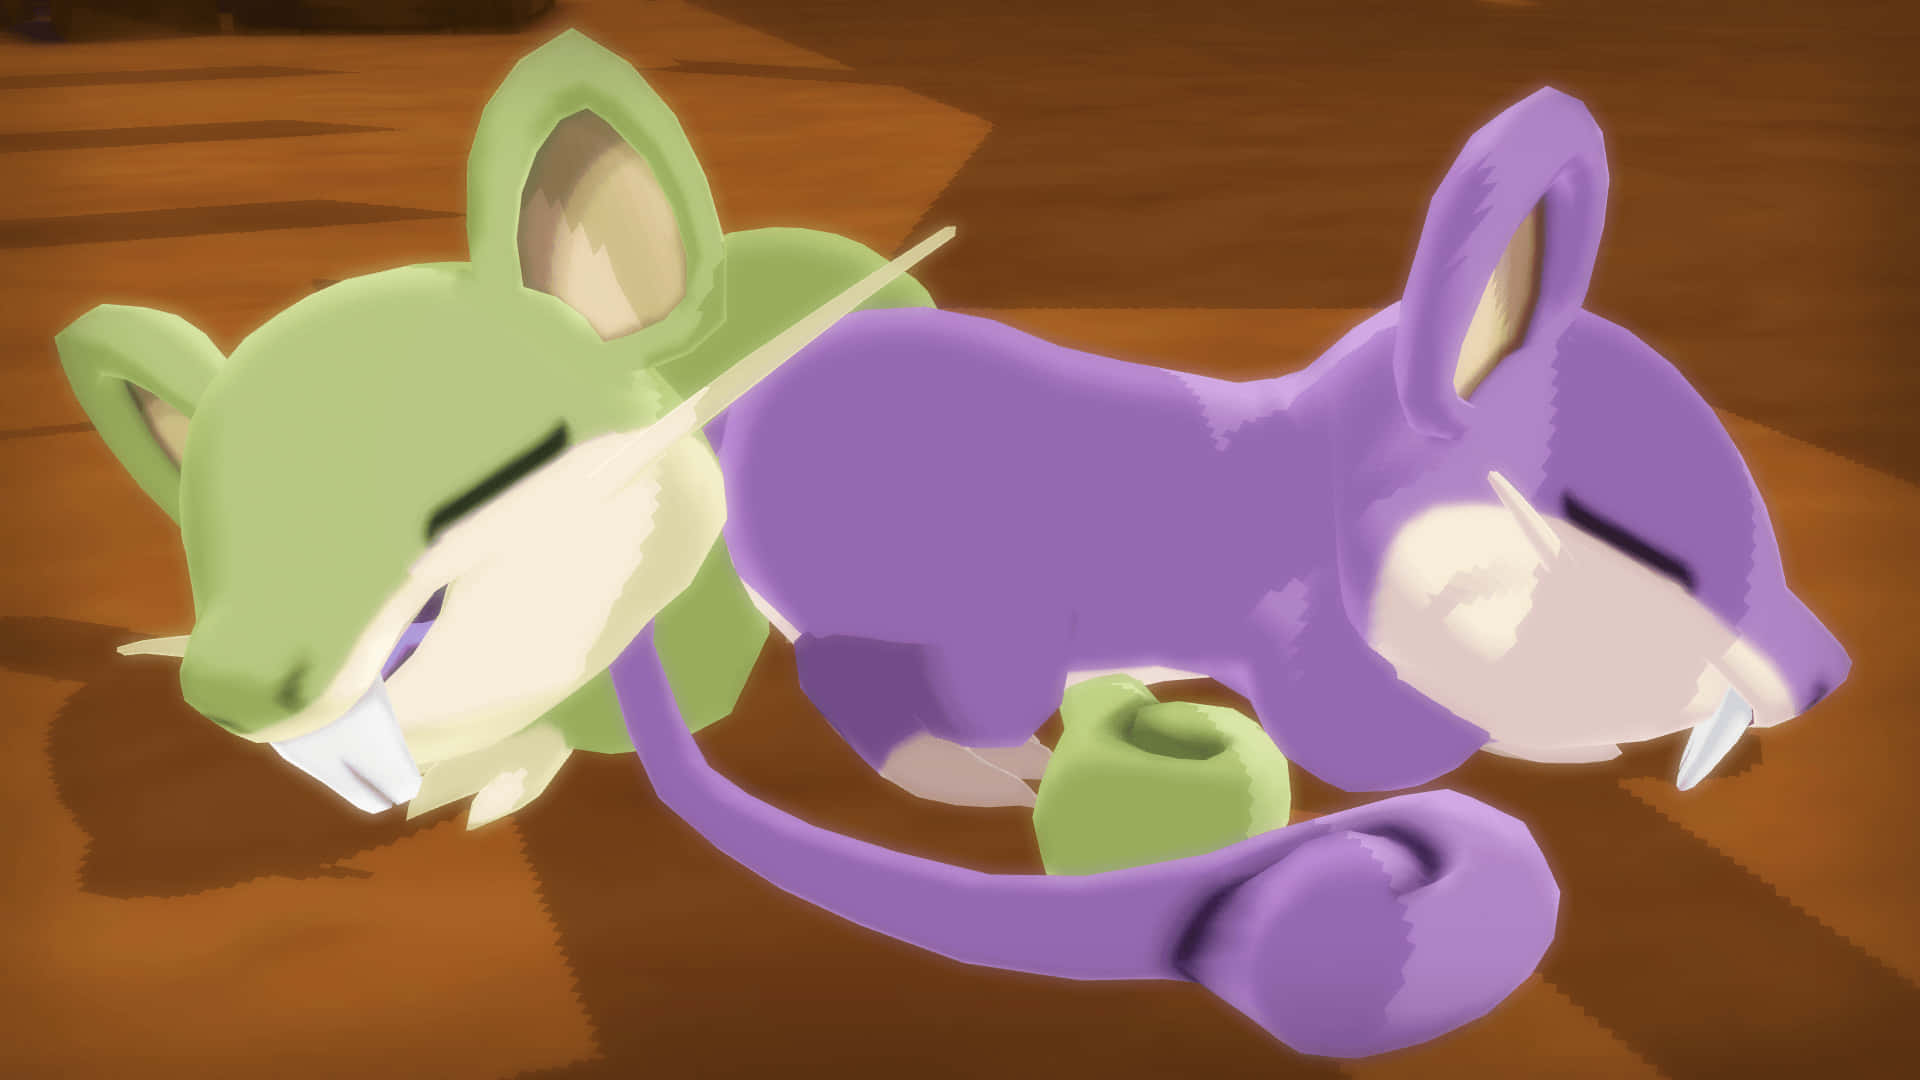 Green And Purple Pokemon Rattata Sleeping Peacefully Wallpaper